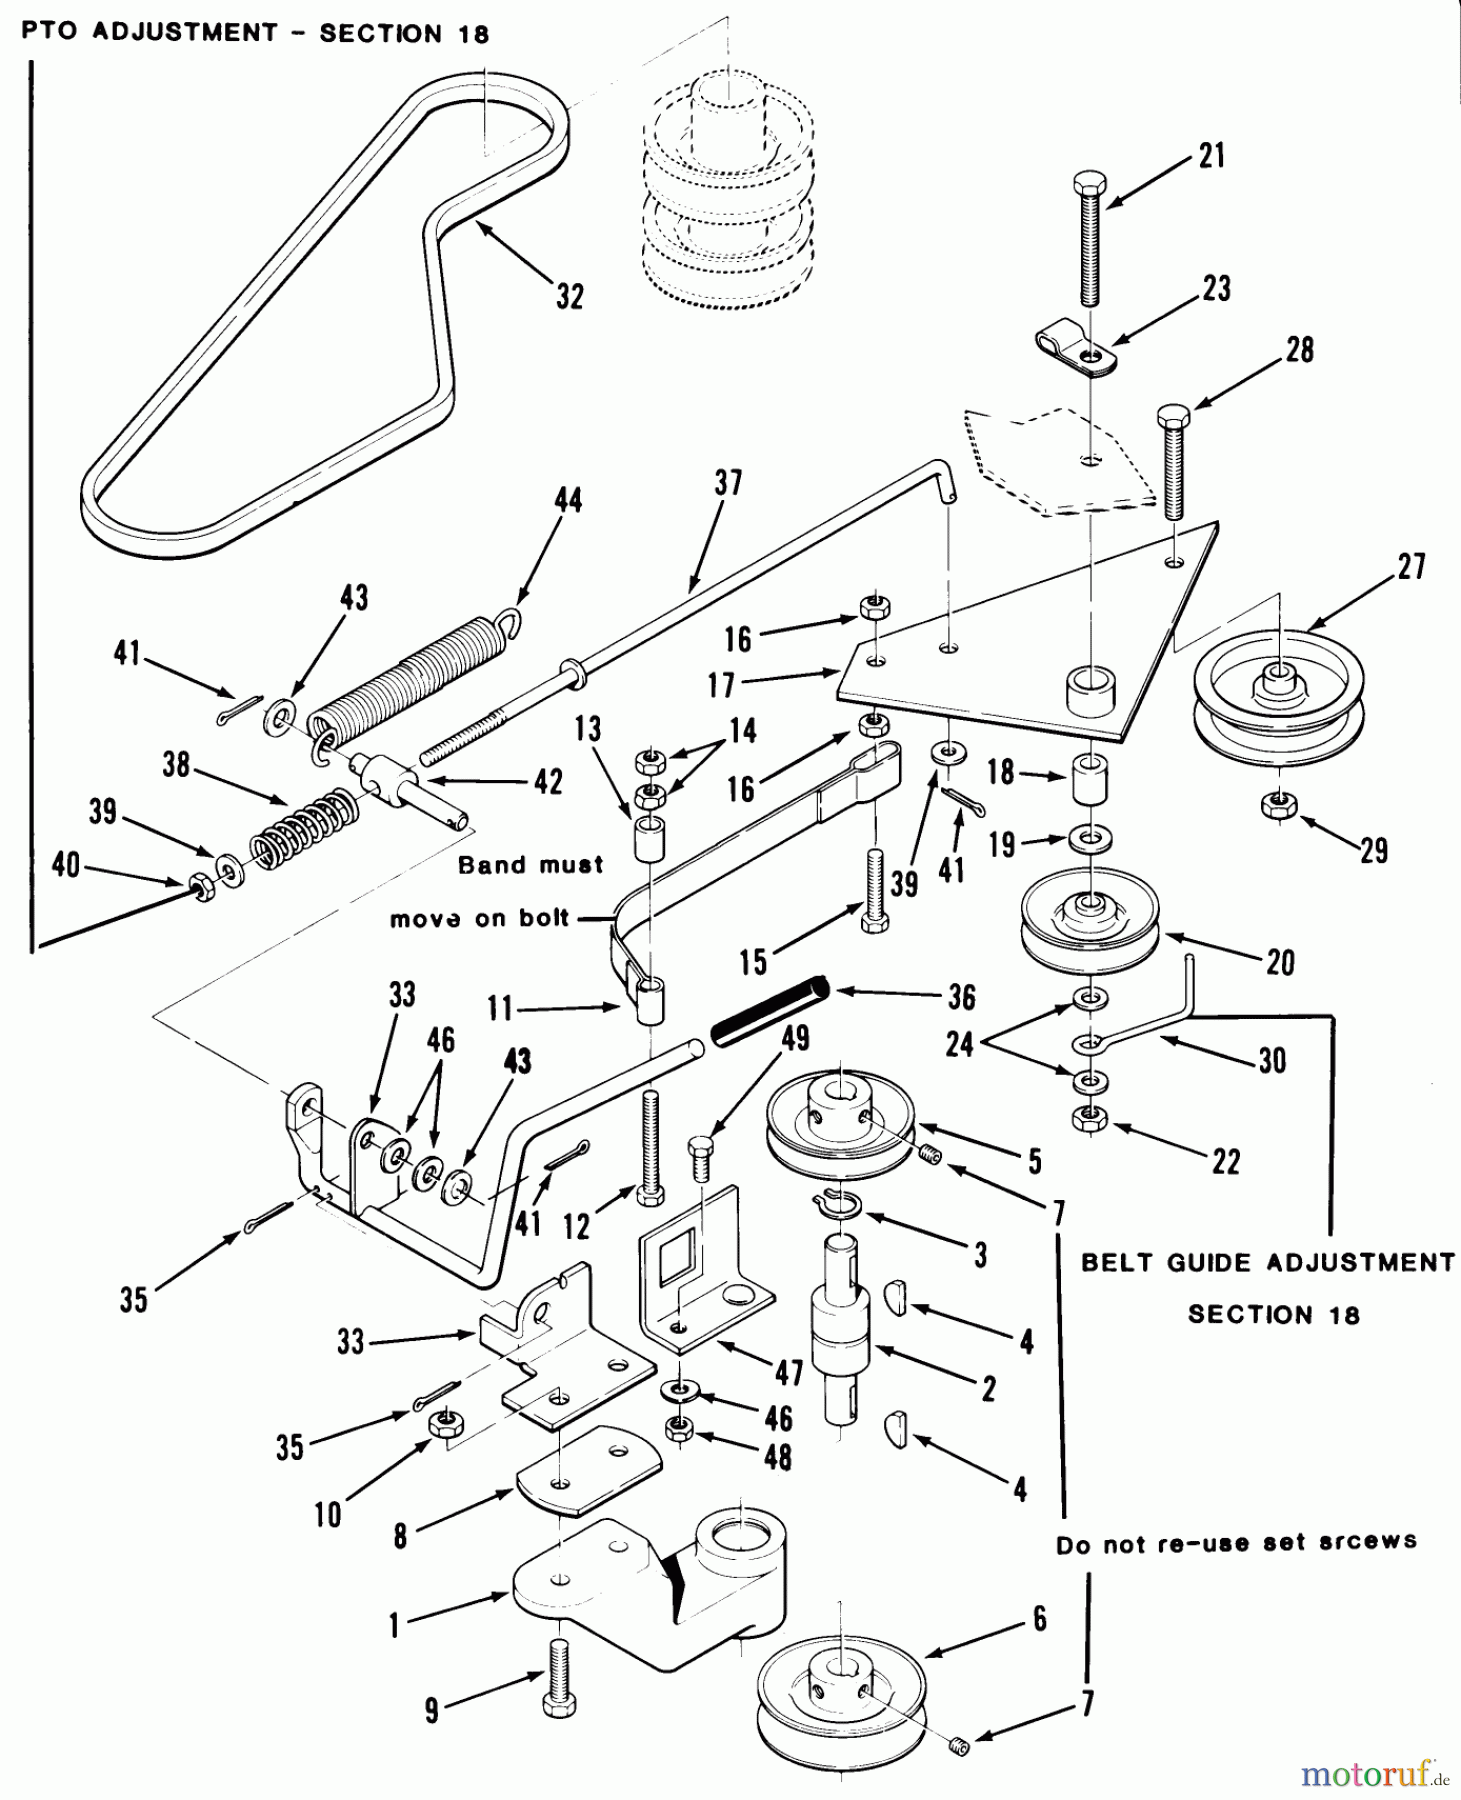  Toro Neu Mowers, Rear-Engine Rider 33-08B301 (108-3) - Toro 108-3 Rear Engine Rider, 1985 PTO CLUTCH, PULLEYS, AND CONTROLS